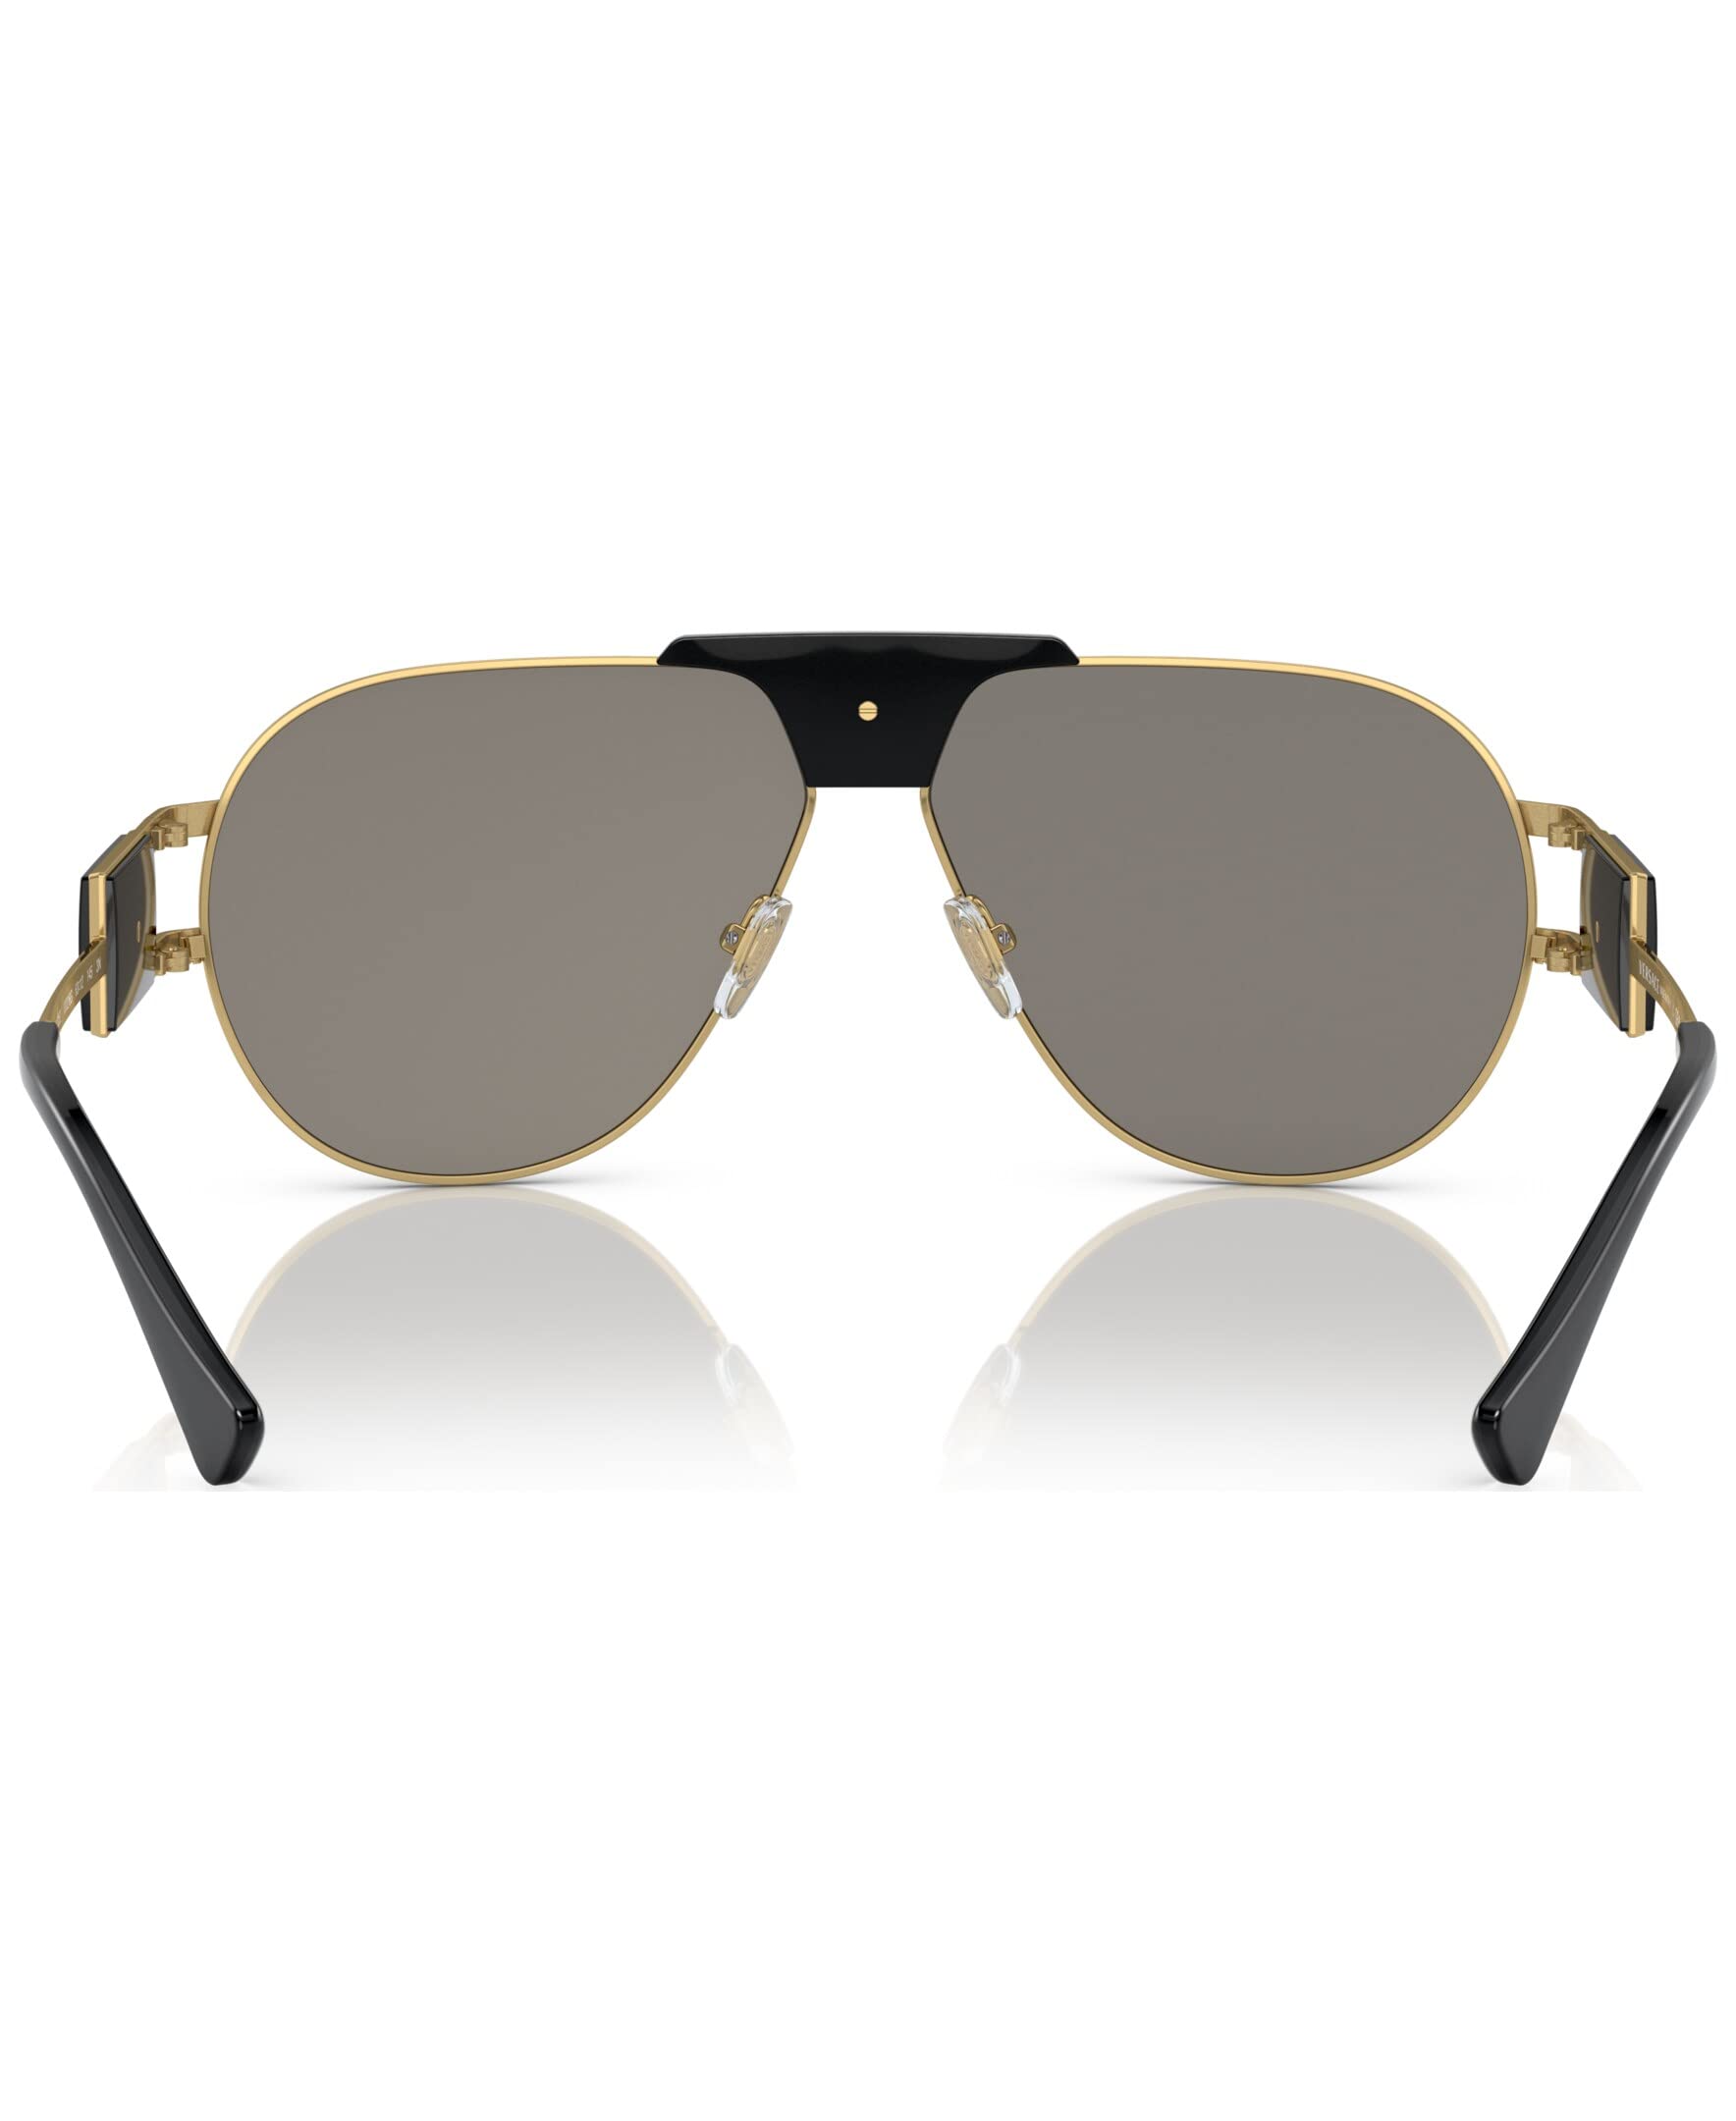 Versace Man Sunglasses Gold Frame, Dark Brown Lenses, 63MM